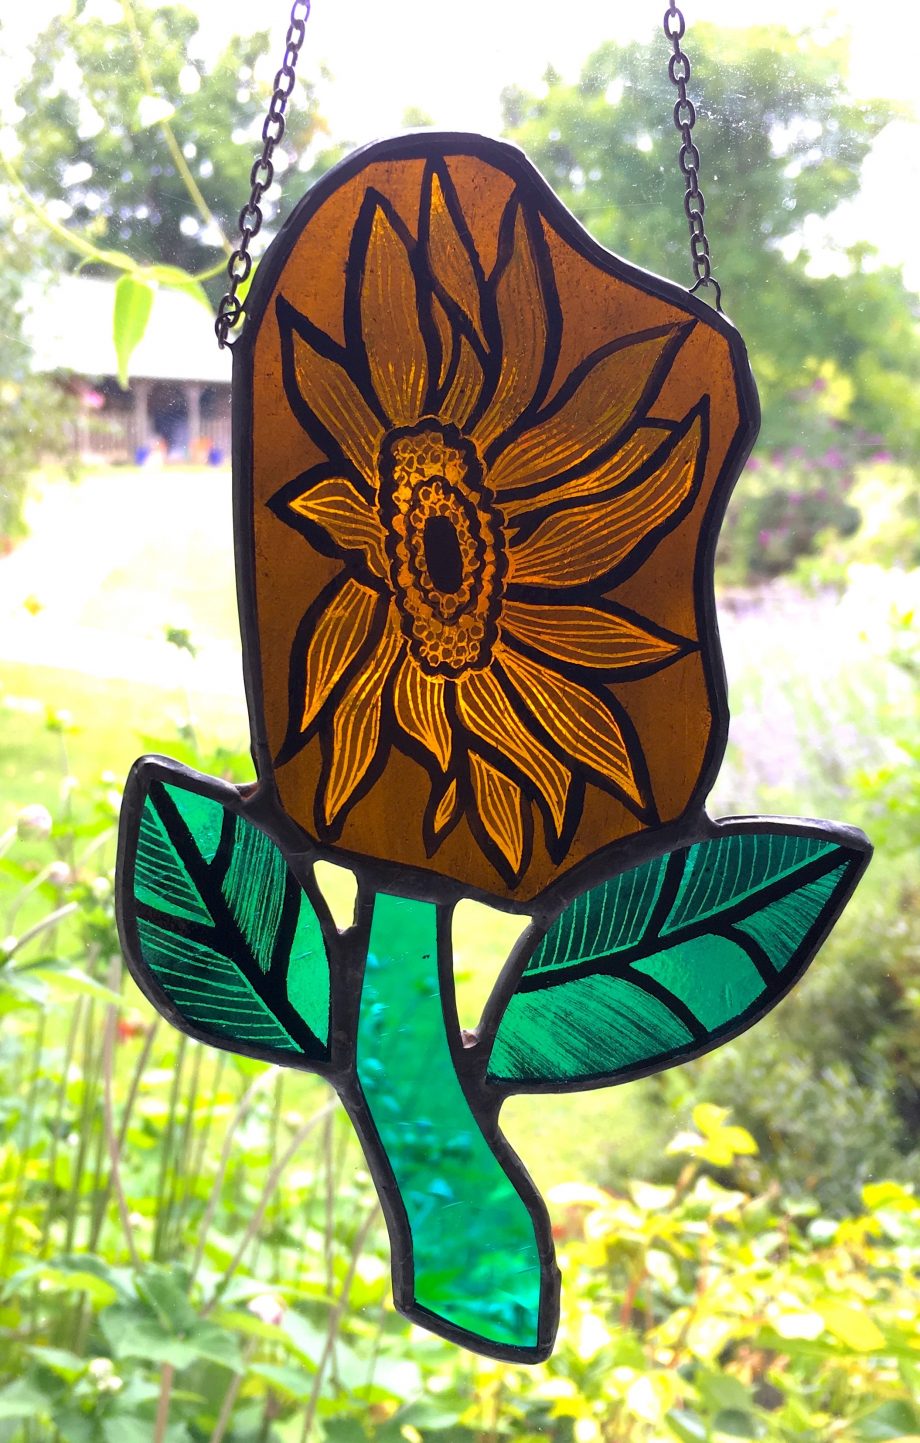 Orange stained glass sunflower